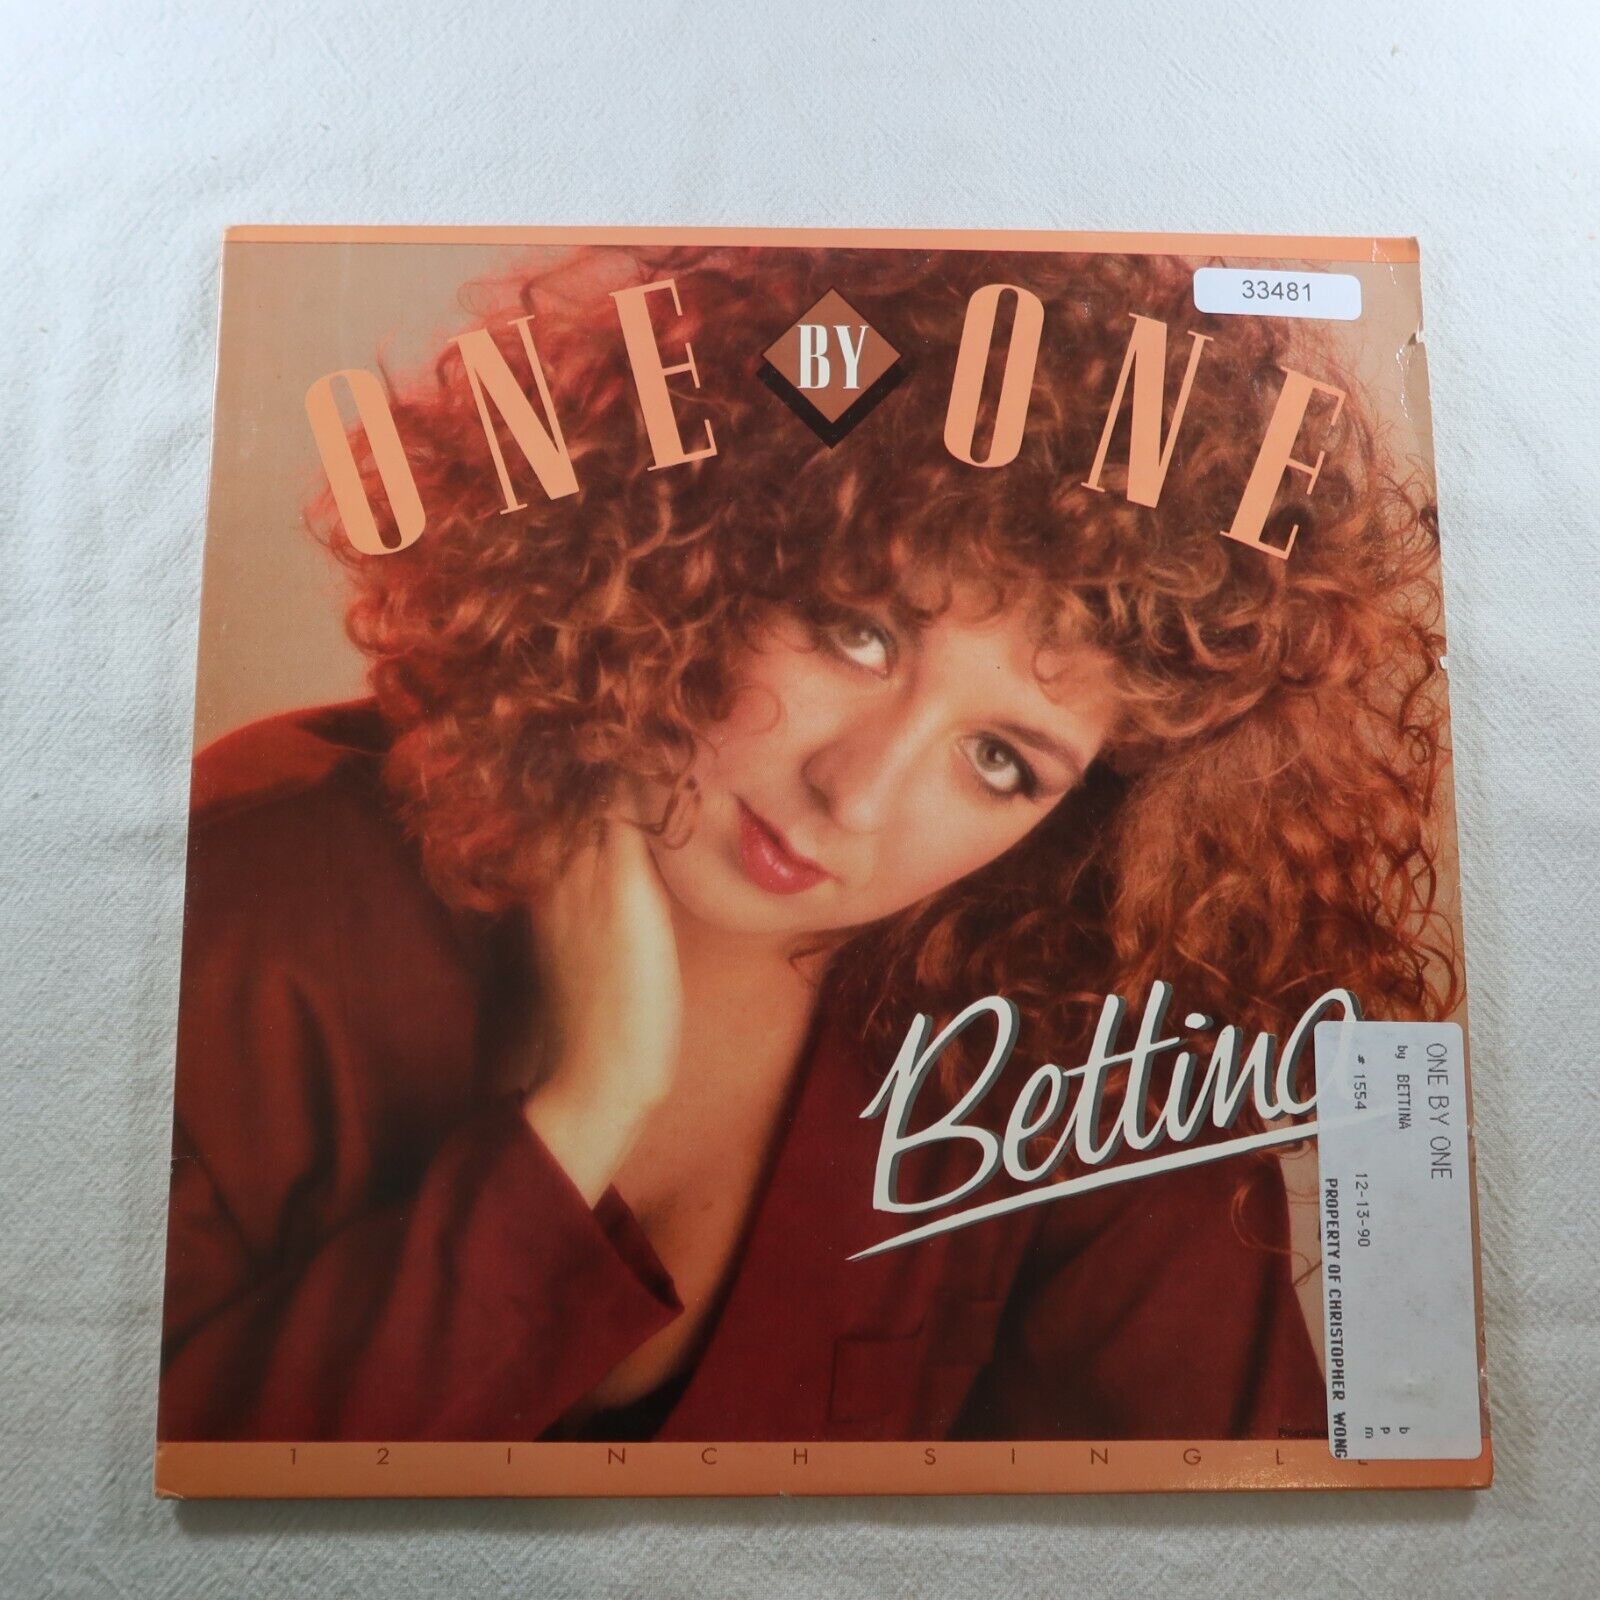 Bettina One By One SINGLE Vinyl Record Album